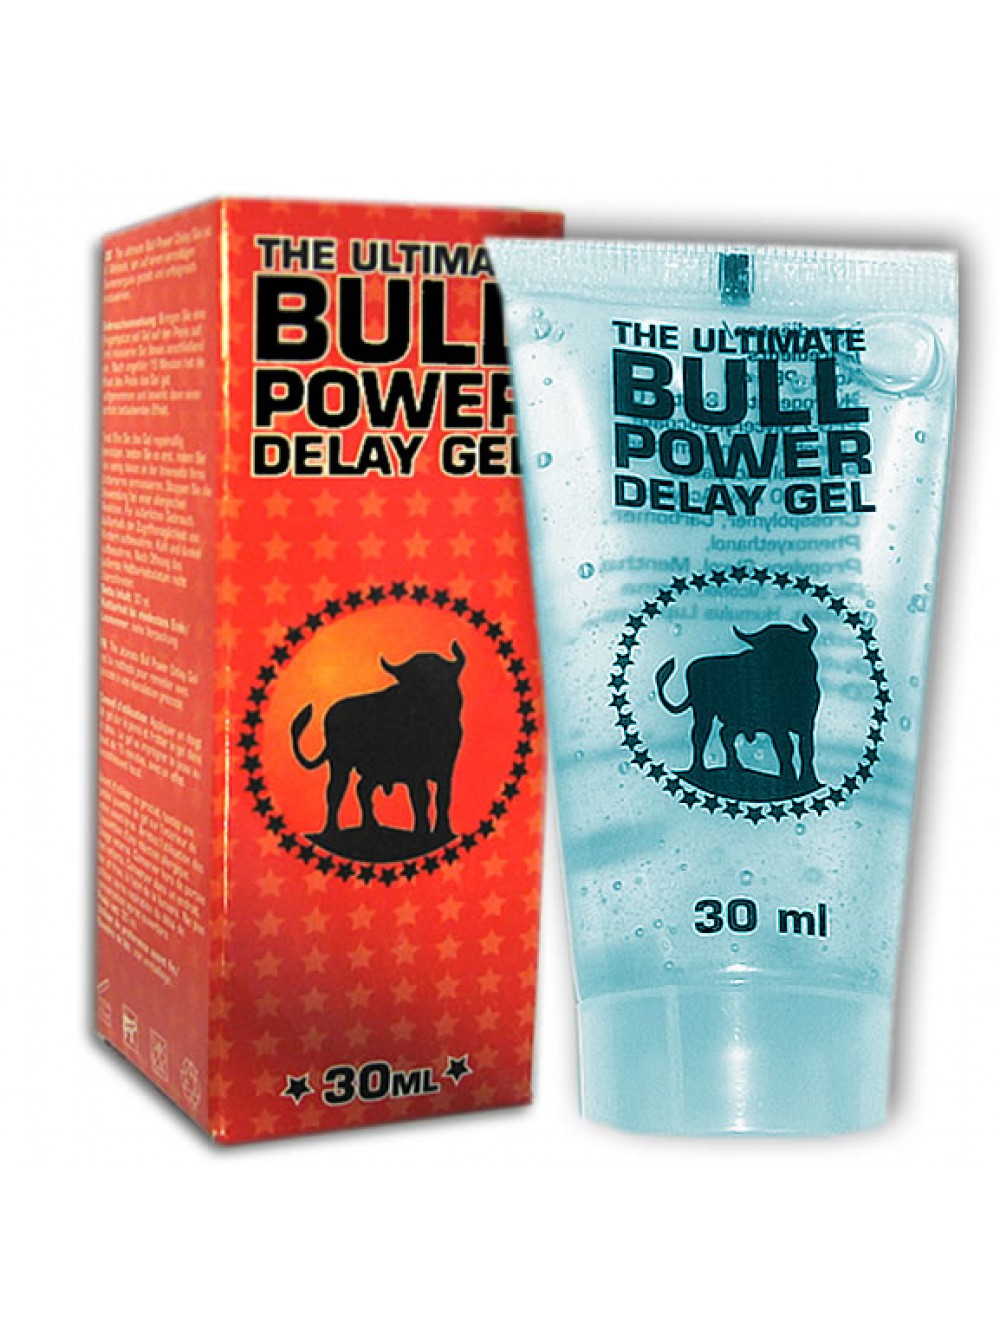 Bull Power Delay Gel 8717344174053